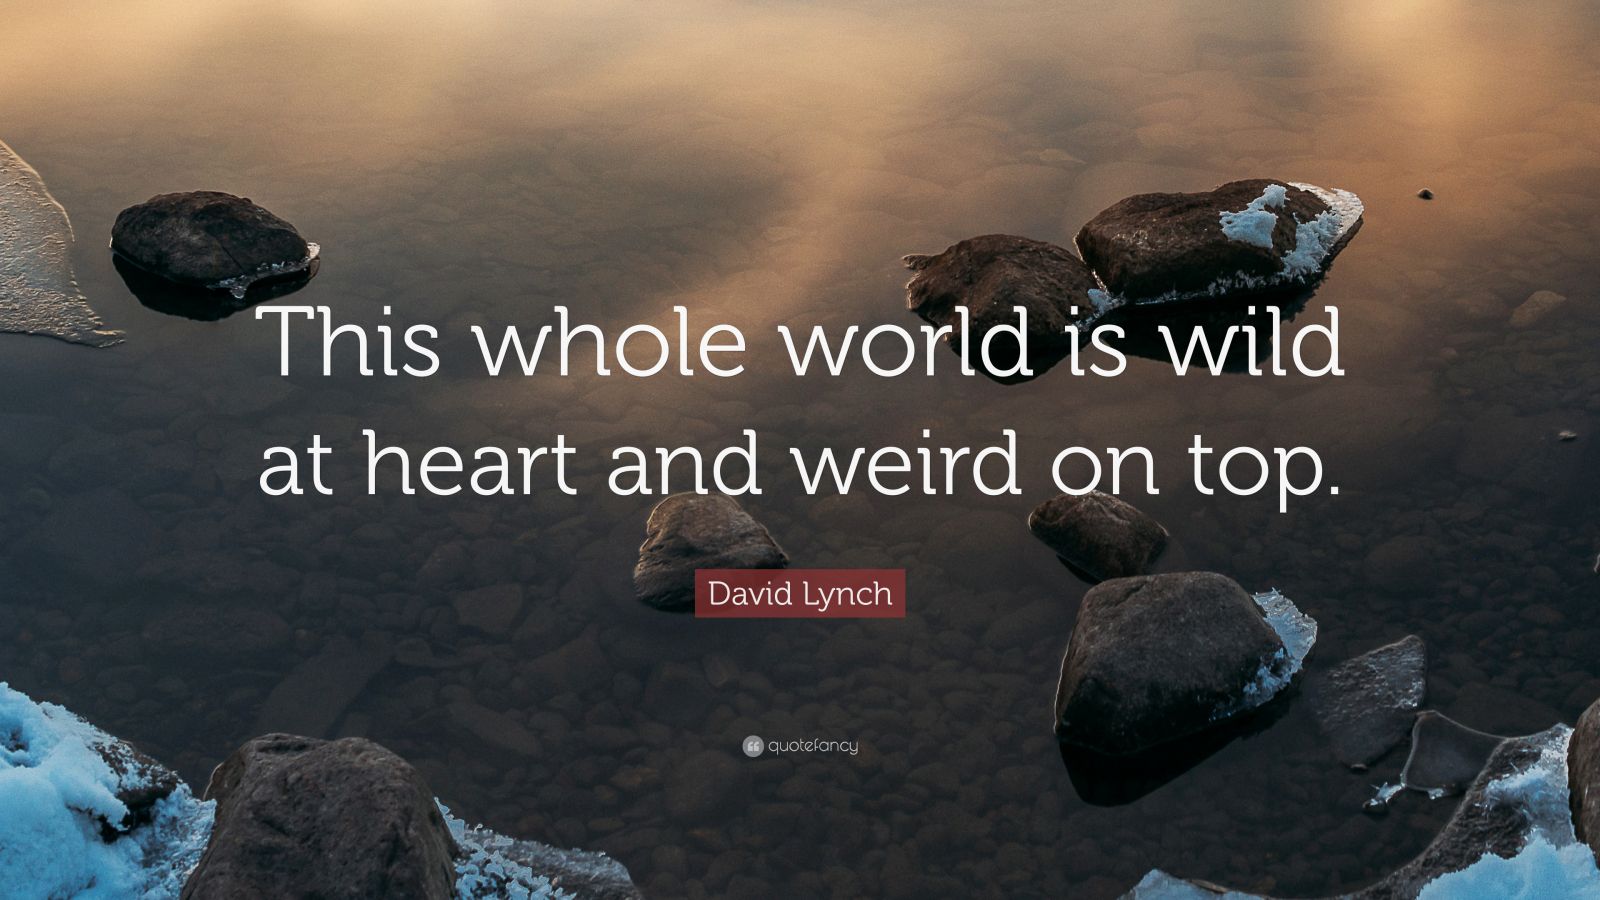 wild at heart david lynch